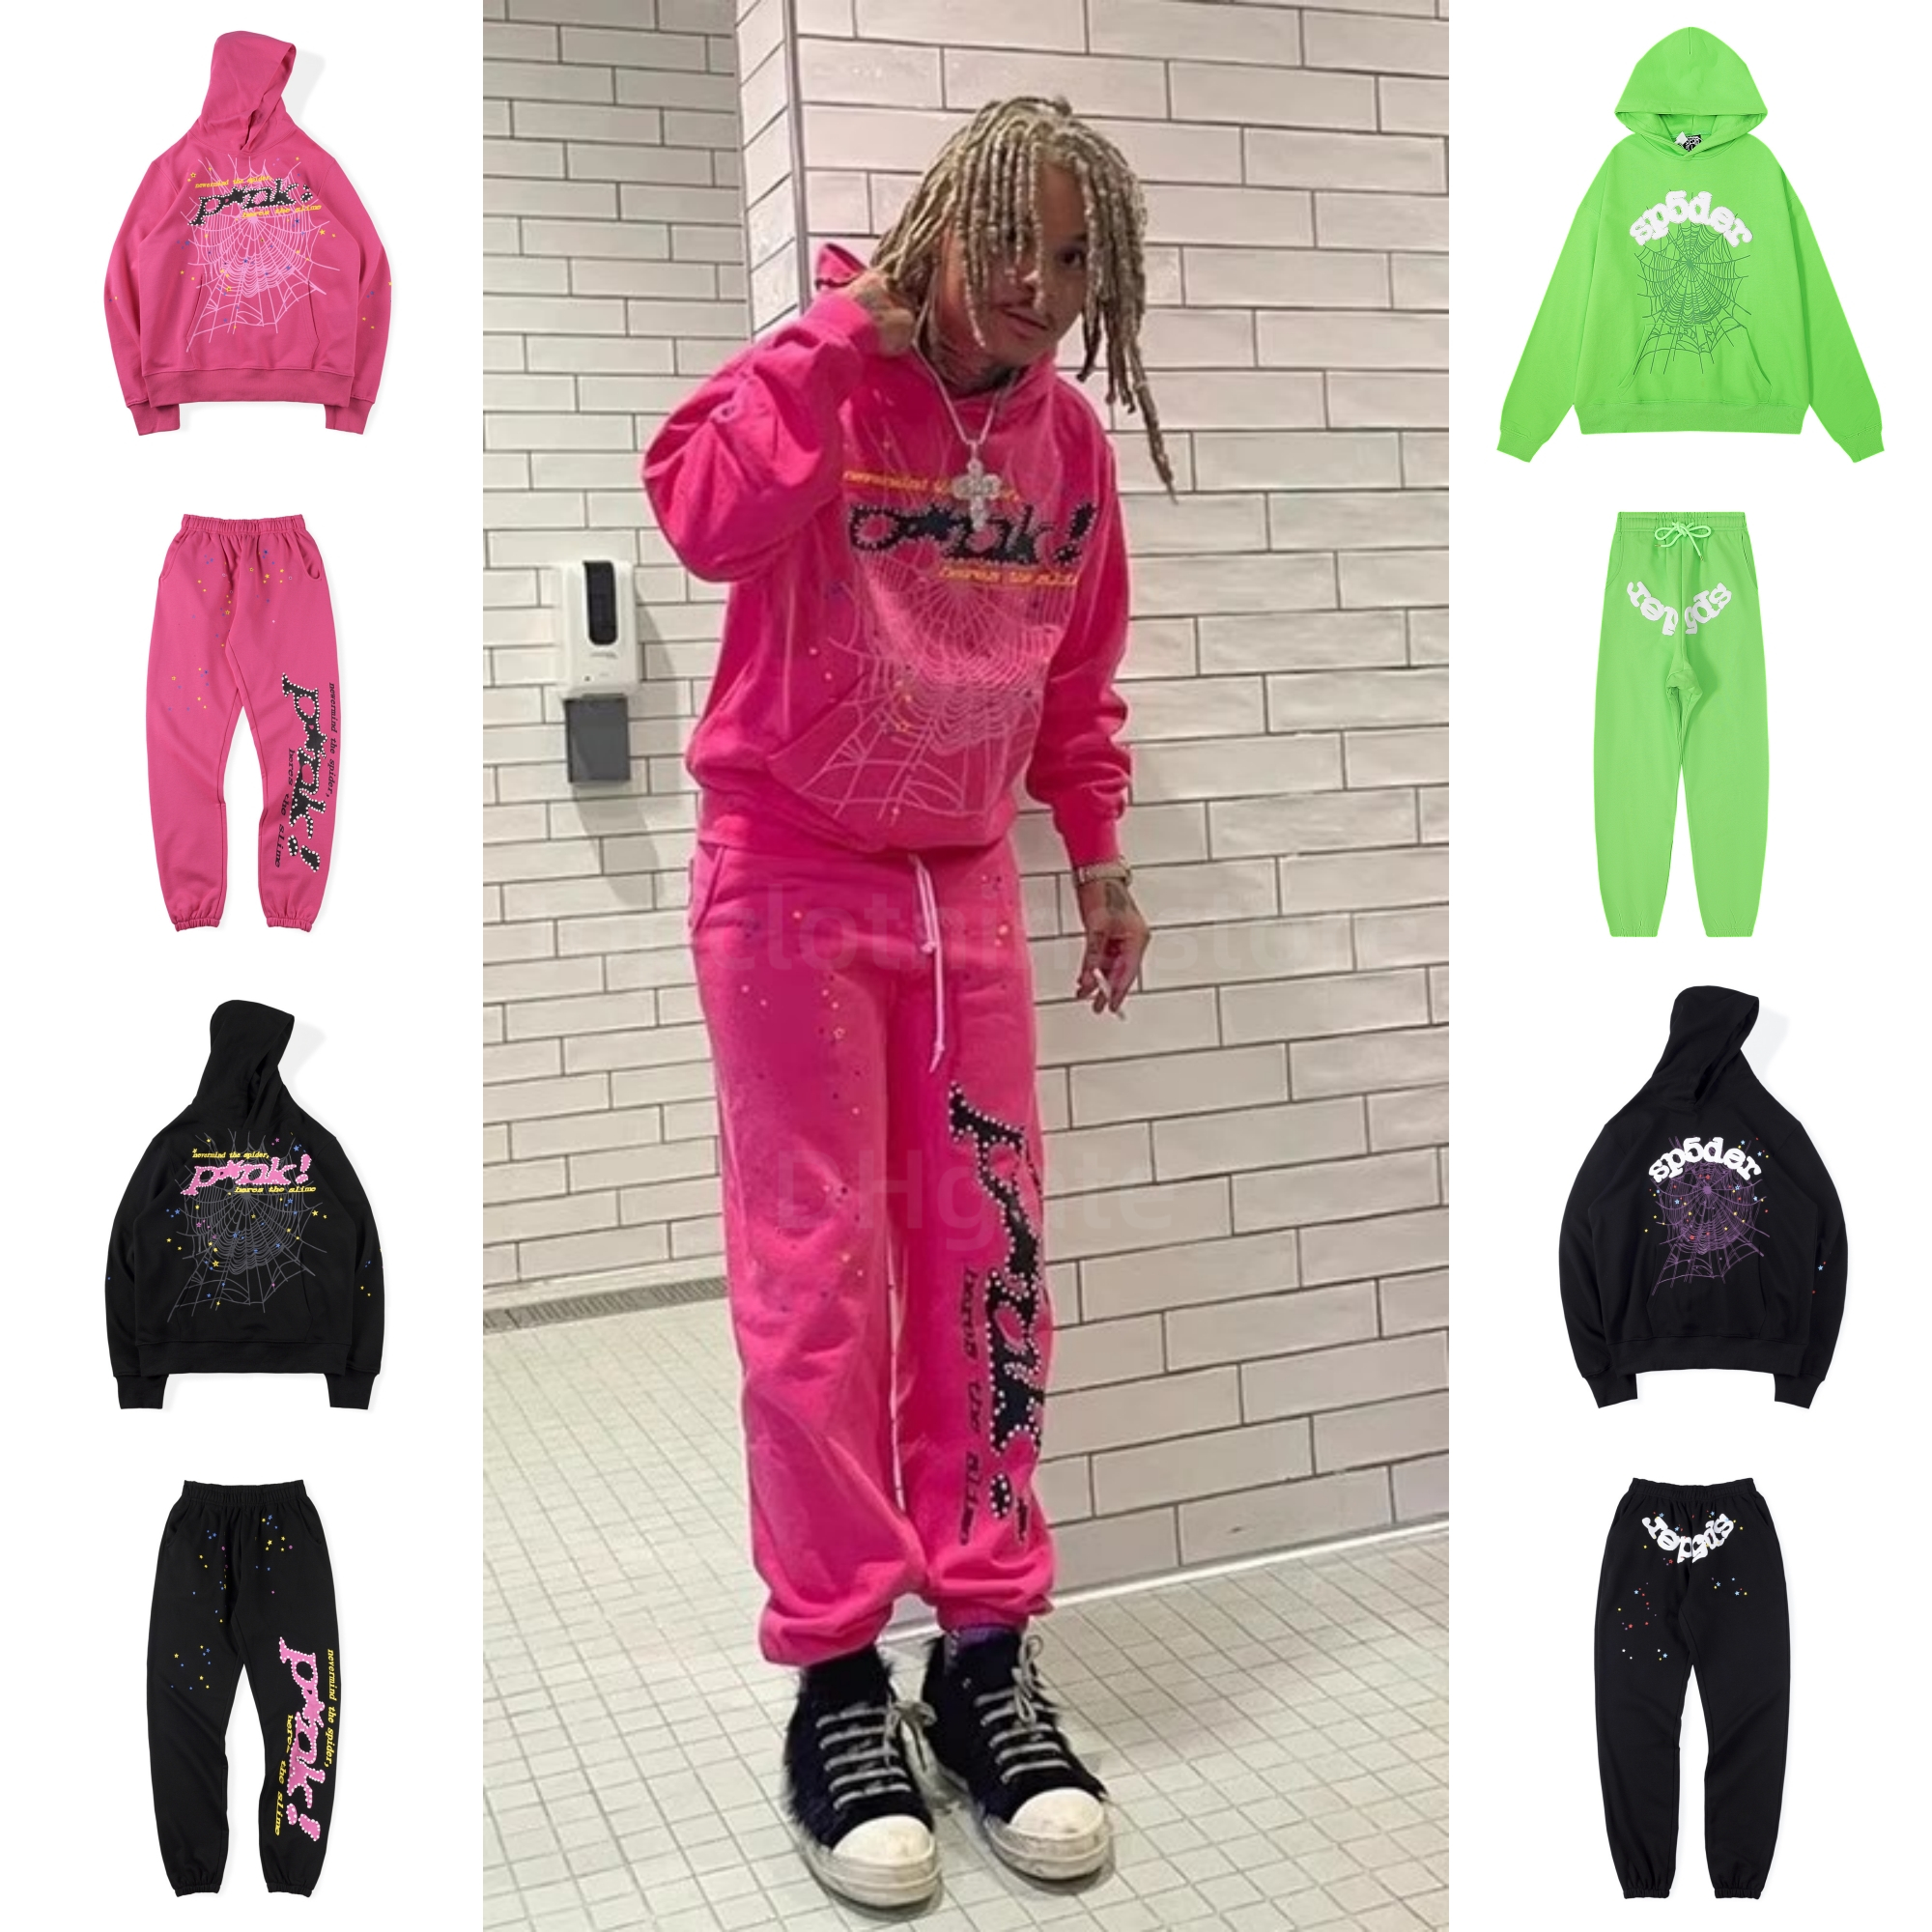 Designer Spider Pink Hoodie Sp5der Young Hoodies Sweatshirts Streetwear 555555 Thug Angel Hoody Männer Frauen Web Pullover Y2K Way S-XL